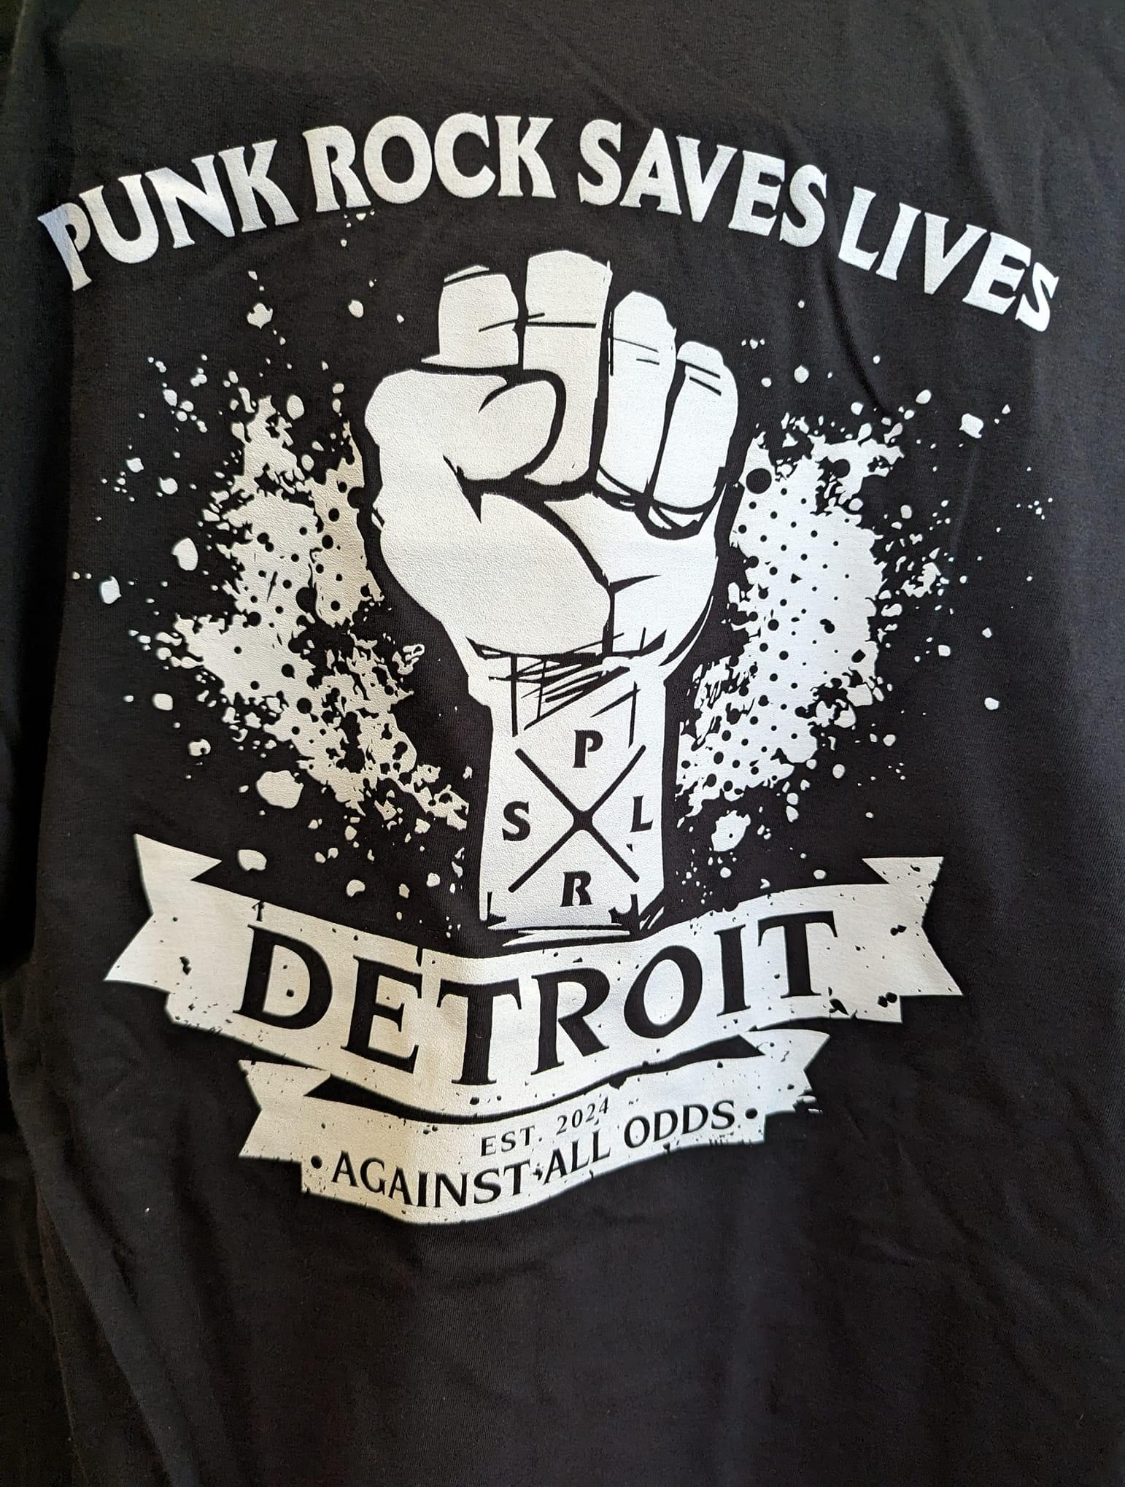 Punk Rock Saves, Battlecreek, Michigan